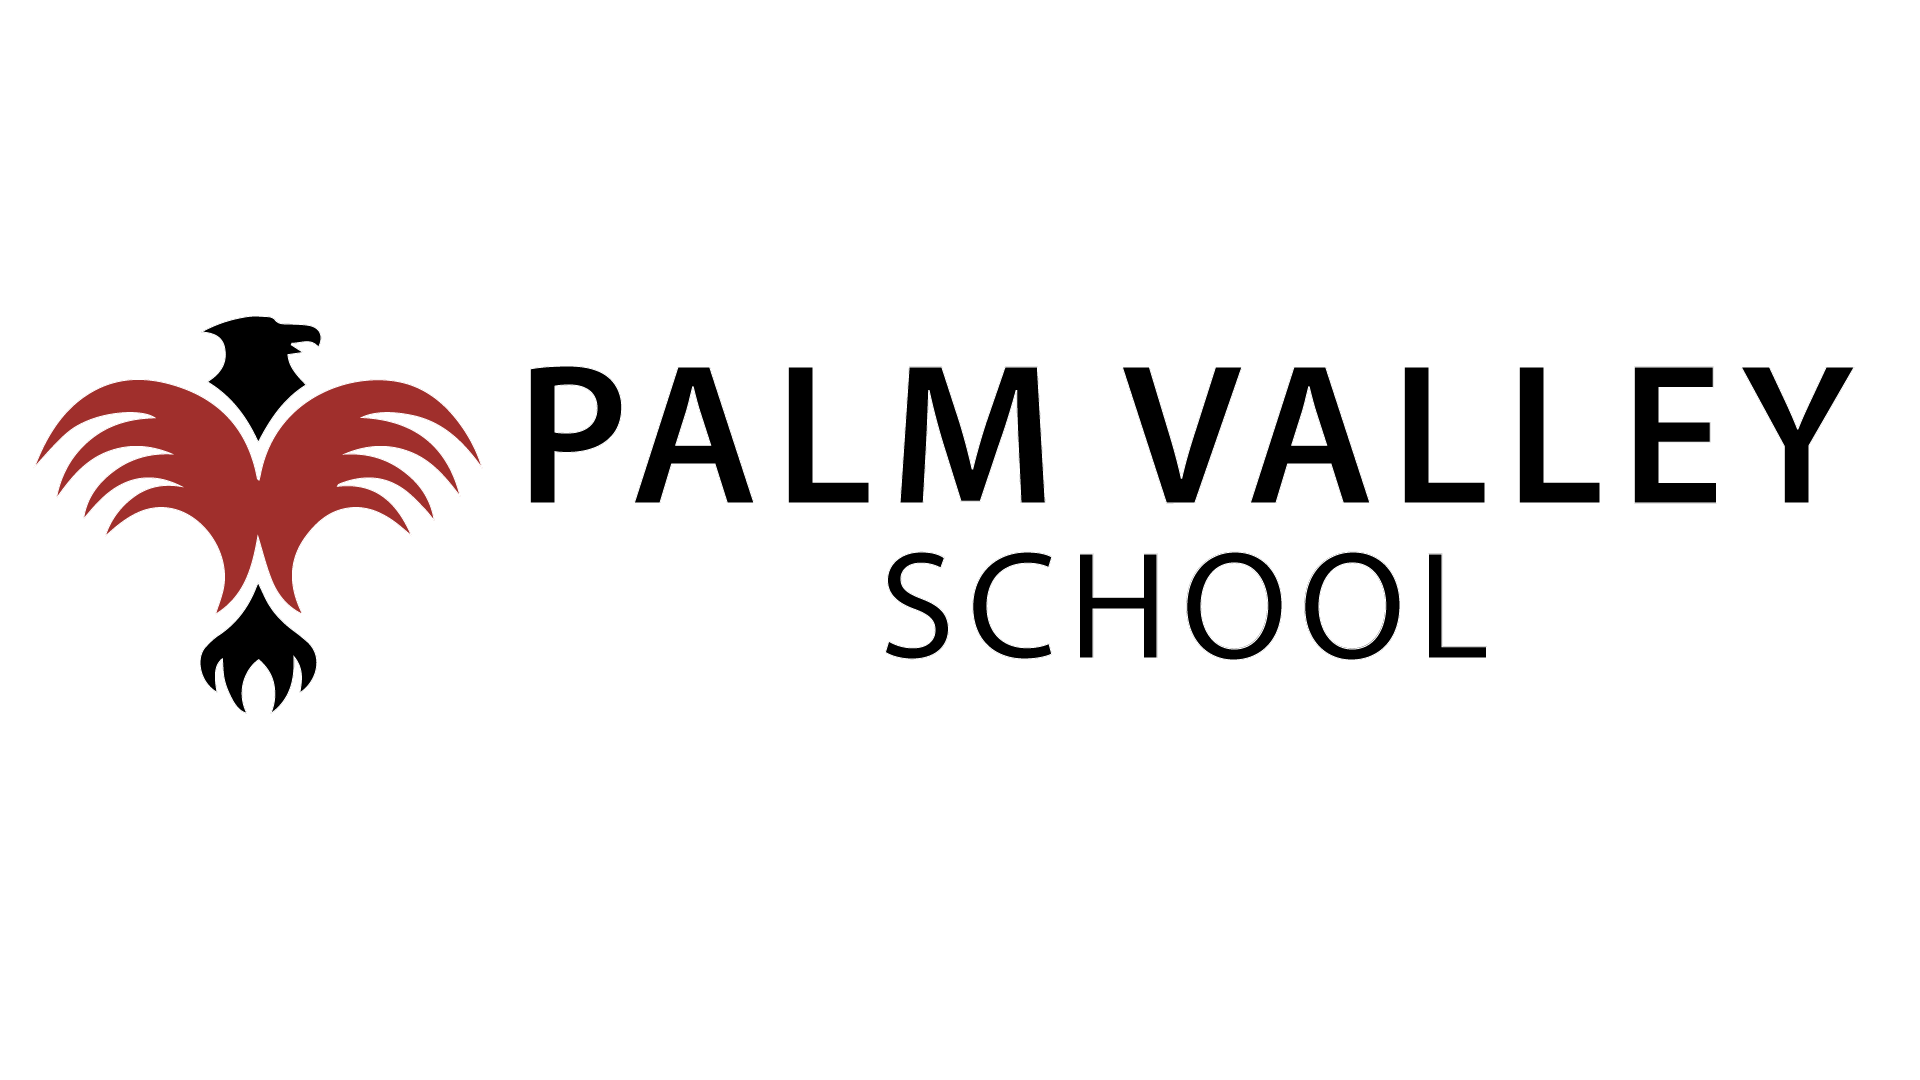 Palm Valley School